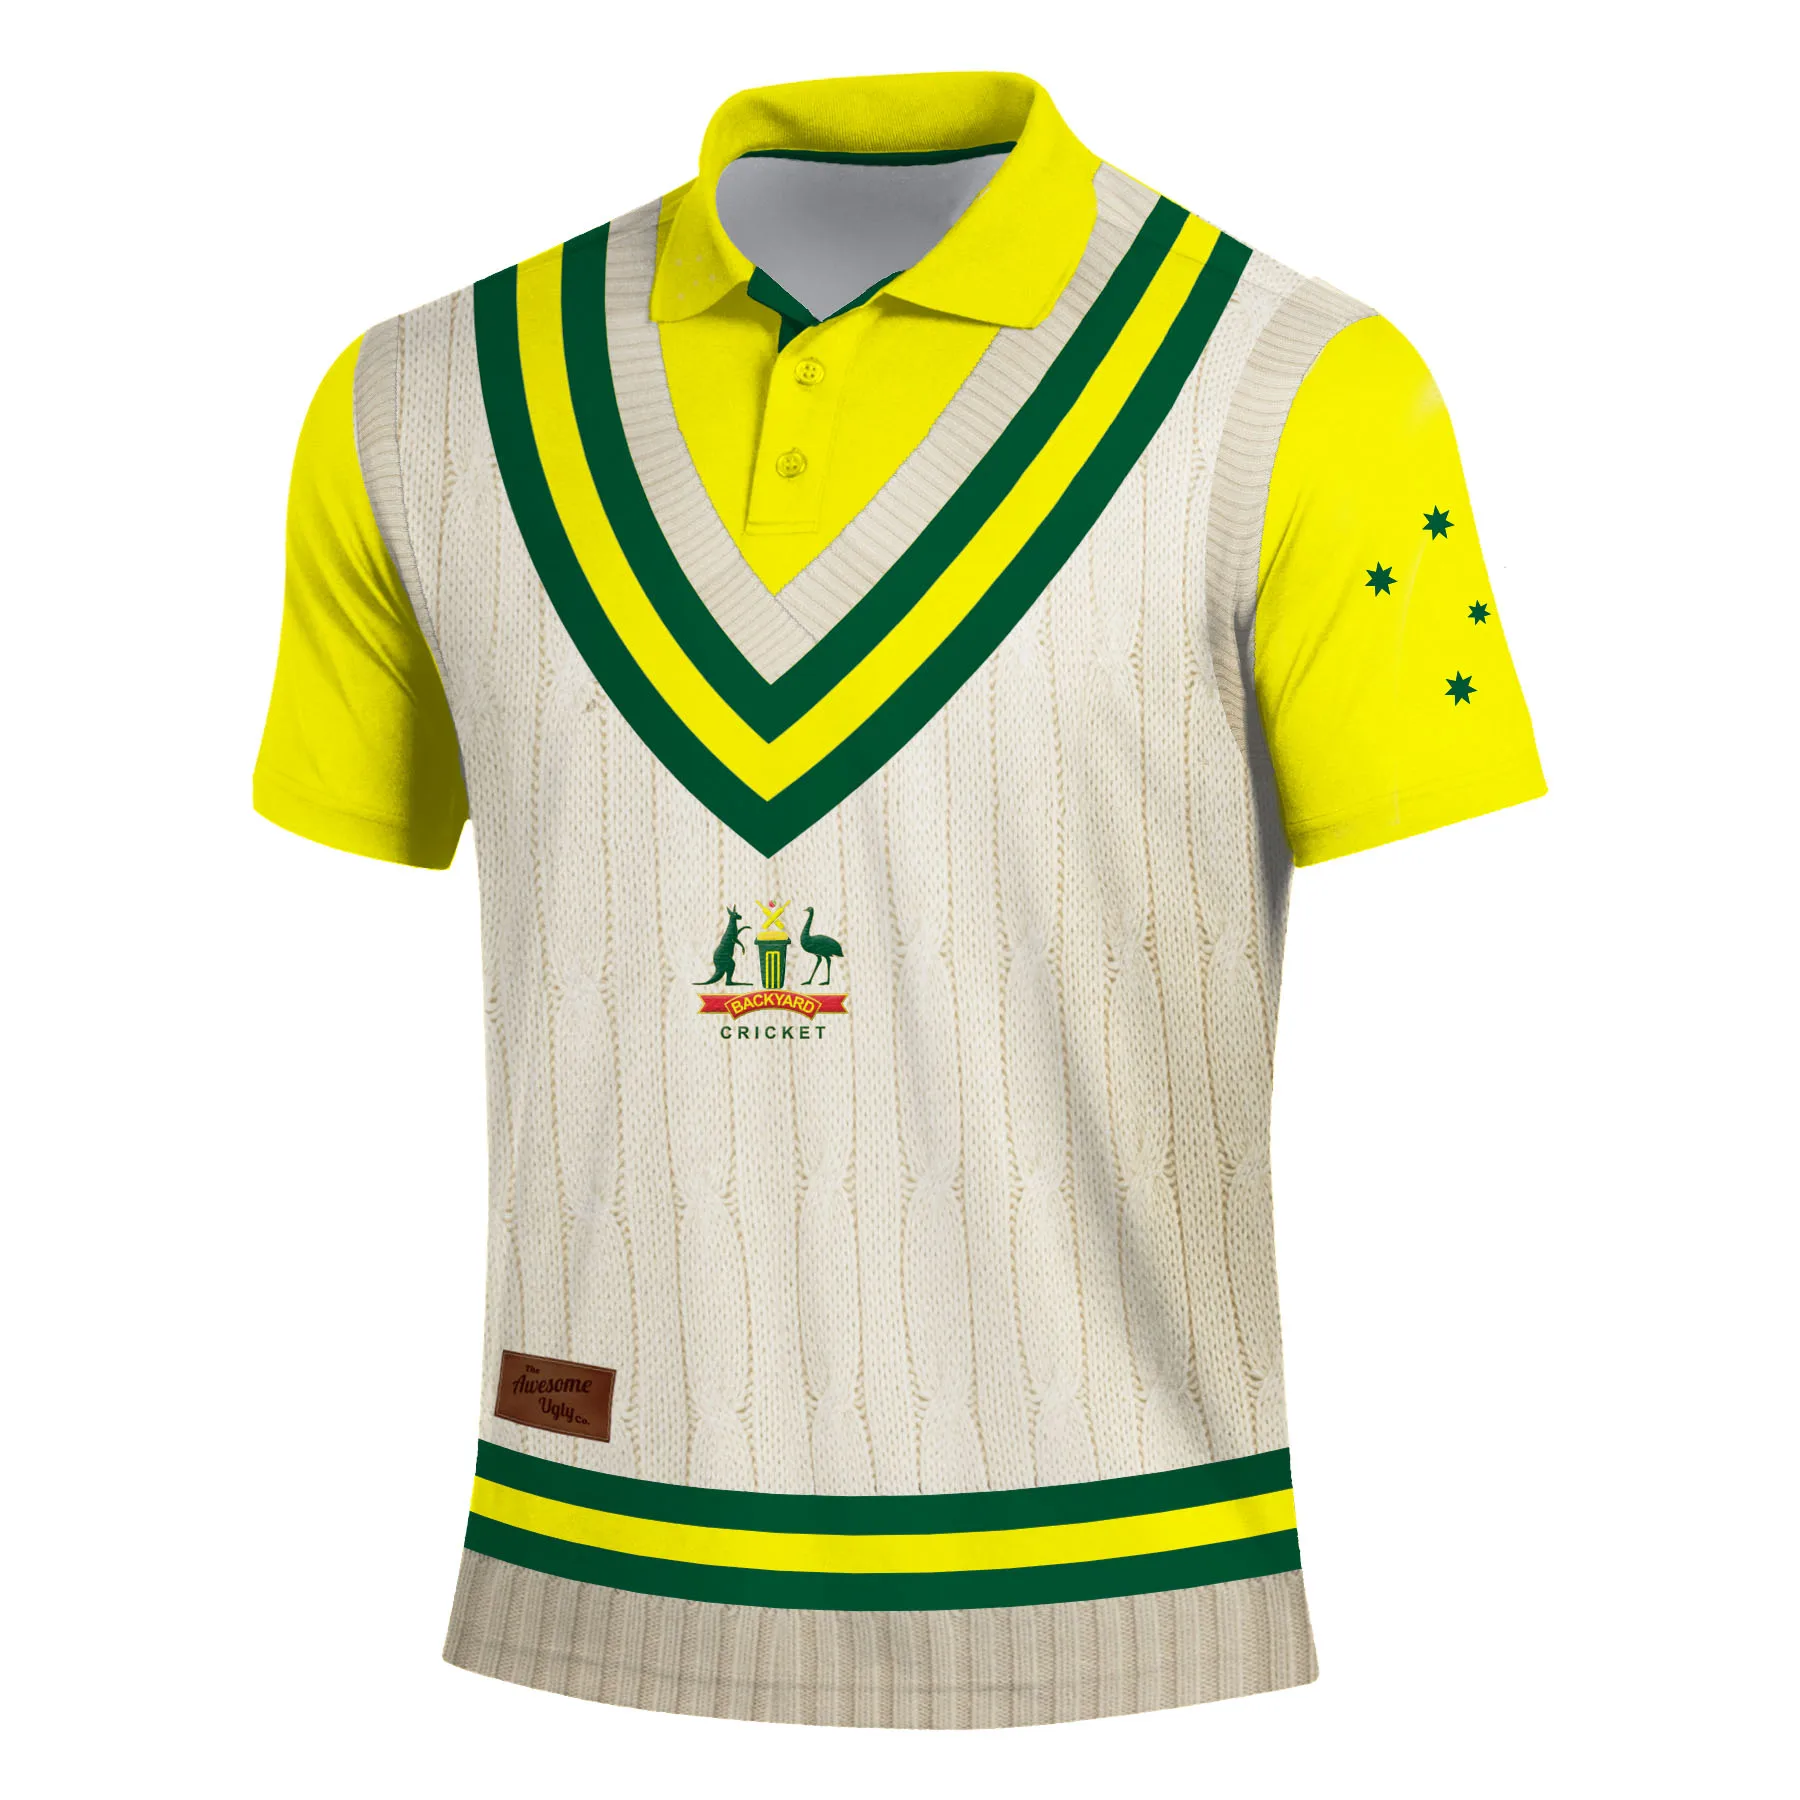 Cricket Uniform Cricket Jersey,Custom Sublimated Cricket